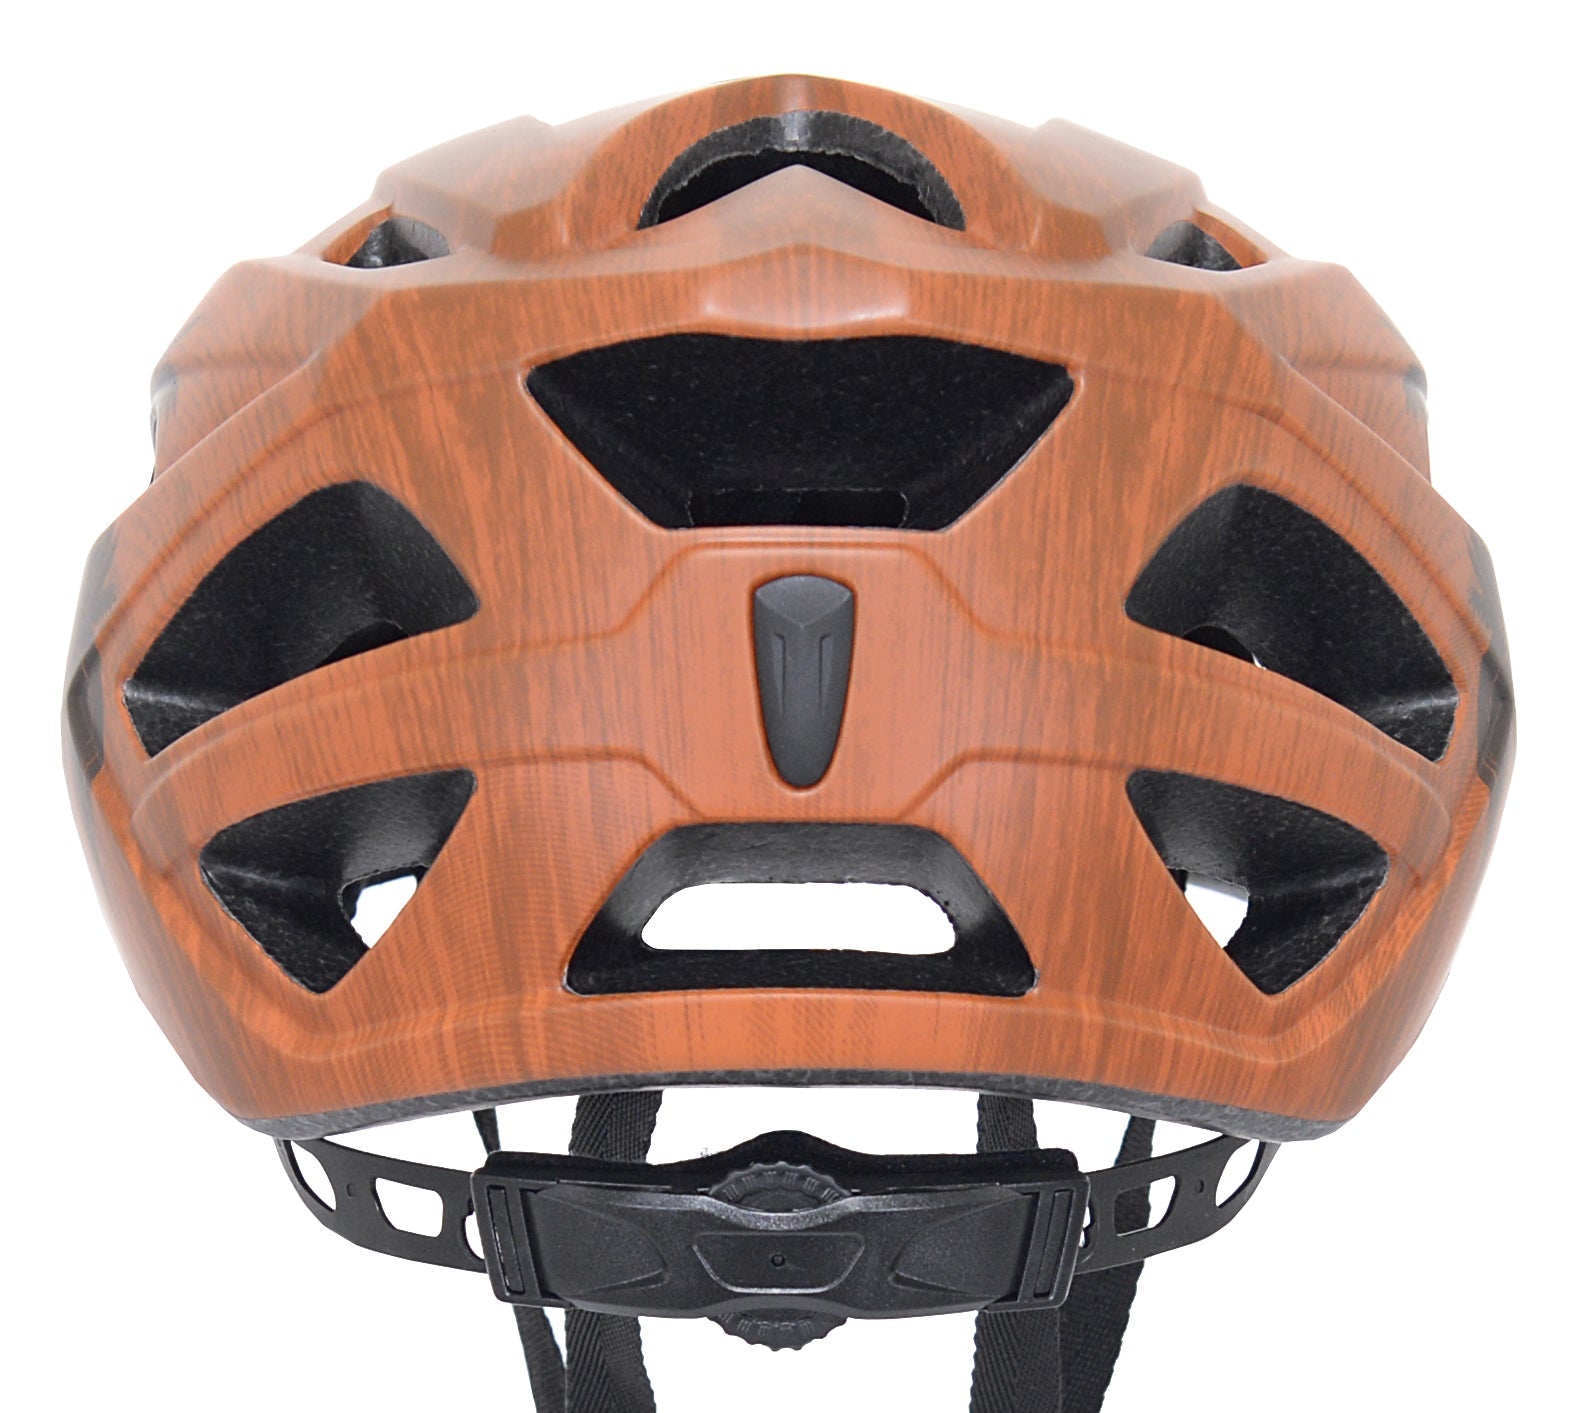 Margaritaville™ Wood Grain Adult Bicycle Helmet | For Ages 13+